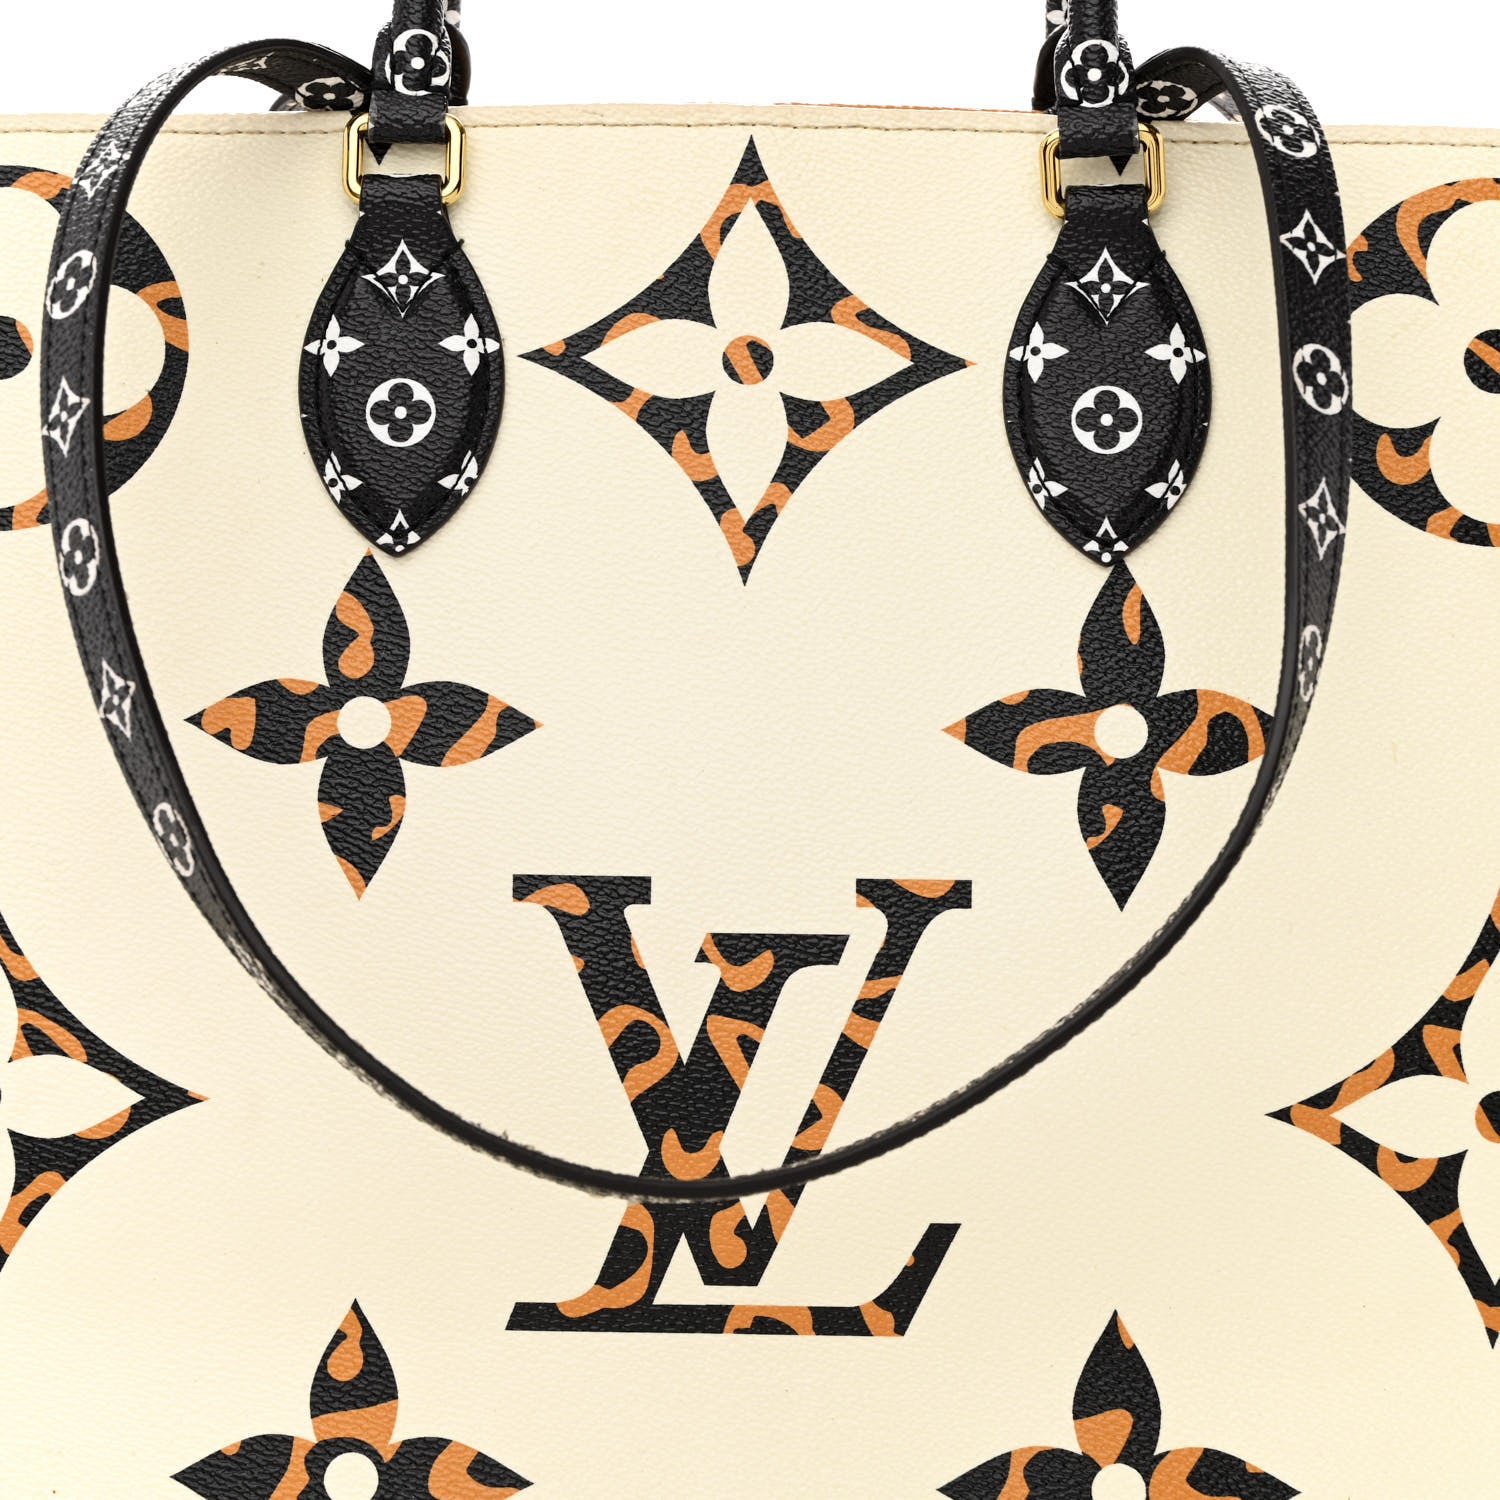 Louis Vuitton, Bags, Louis Vuitton Jungle Onthego Gm Bag Ivory Caramel  Giant Flower Monogram Bag New